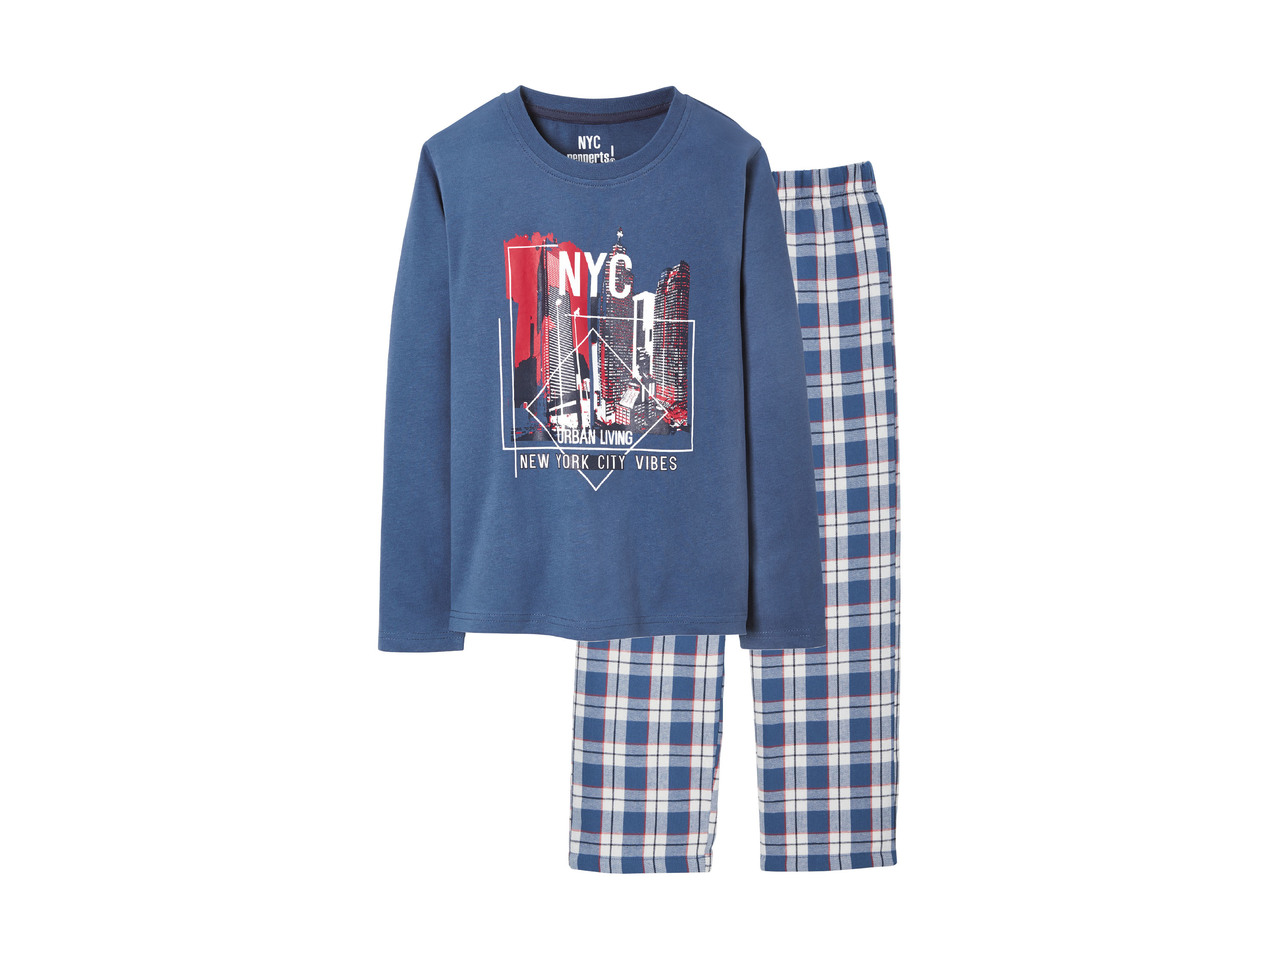 PEPPERTS(R) Pijama para Rapariga/ Rapaz